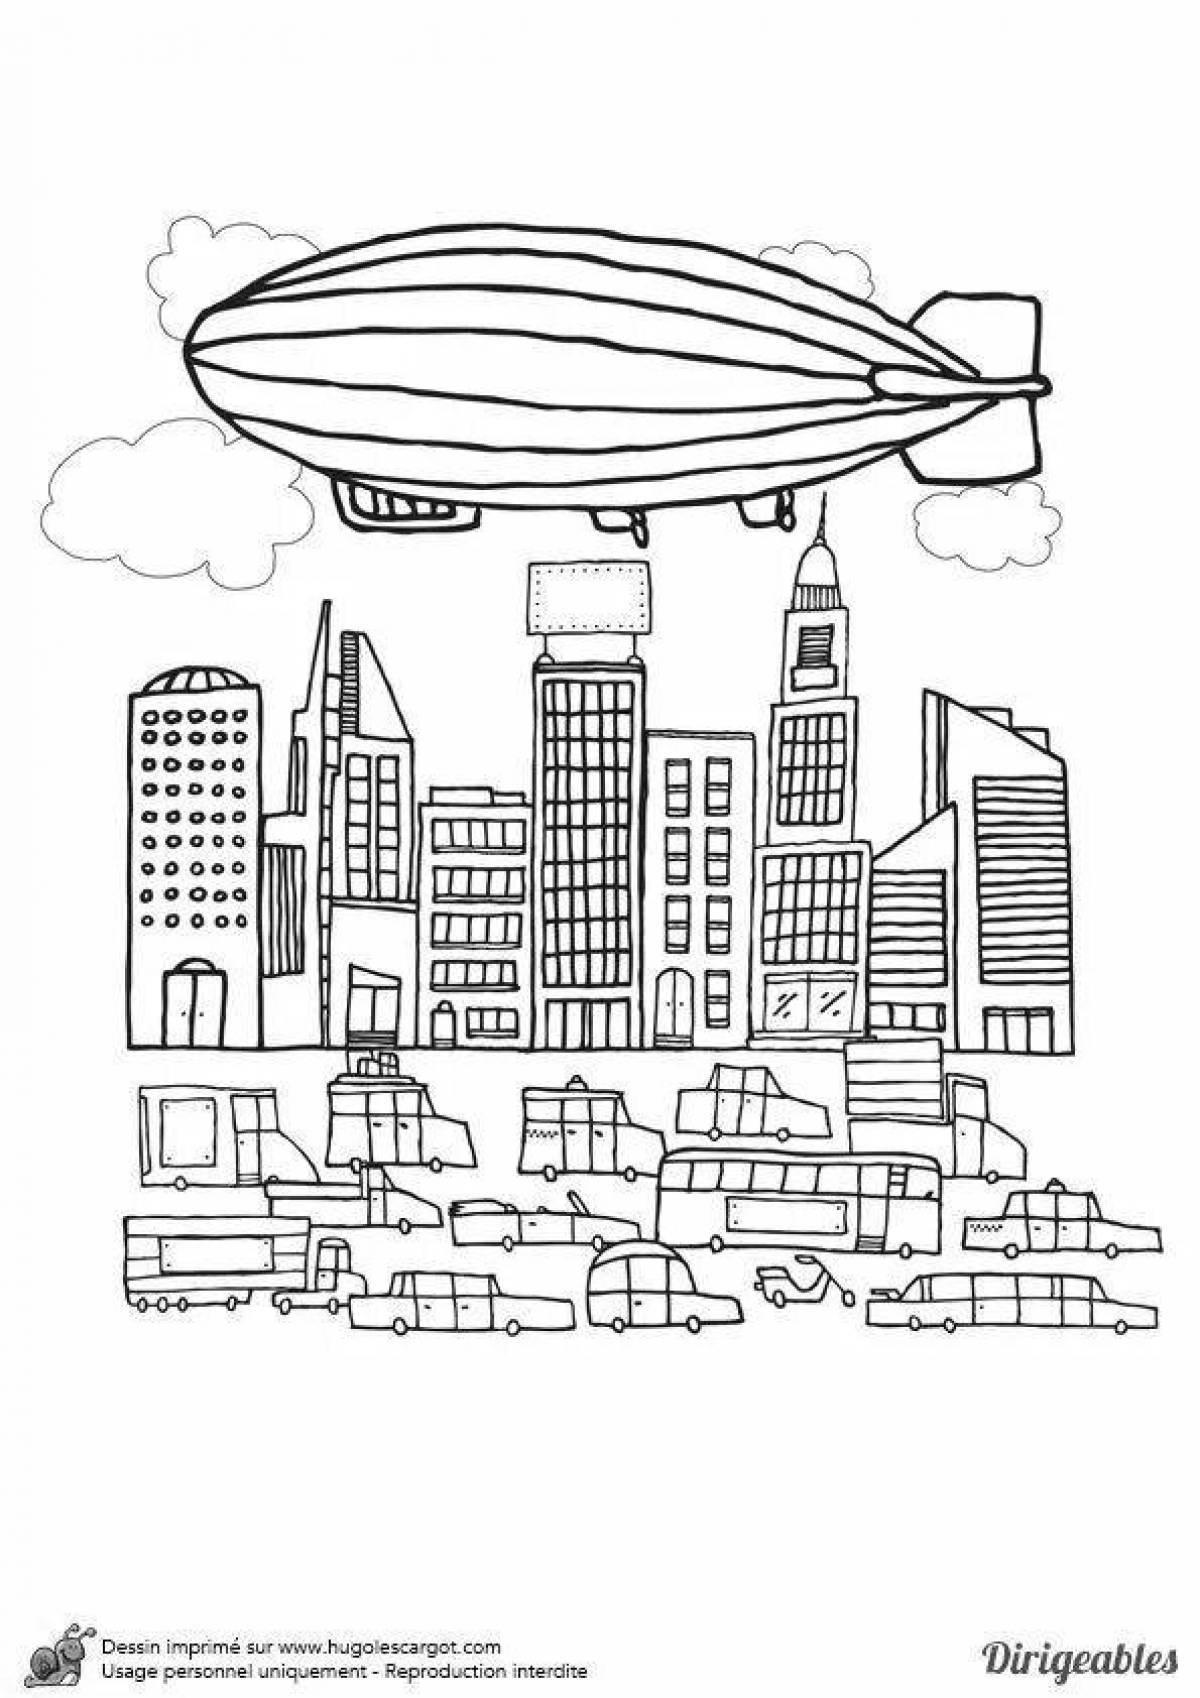 Coloring page dazzling airship